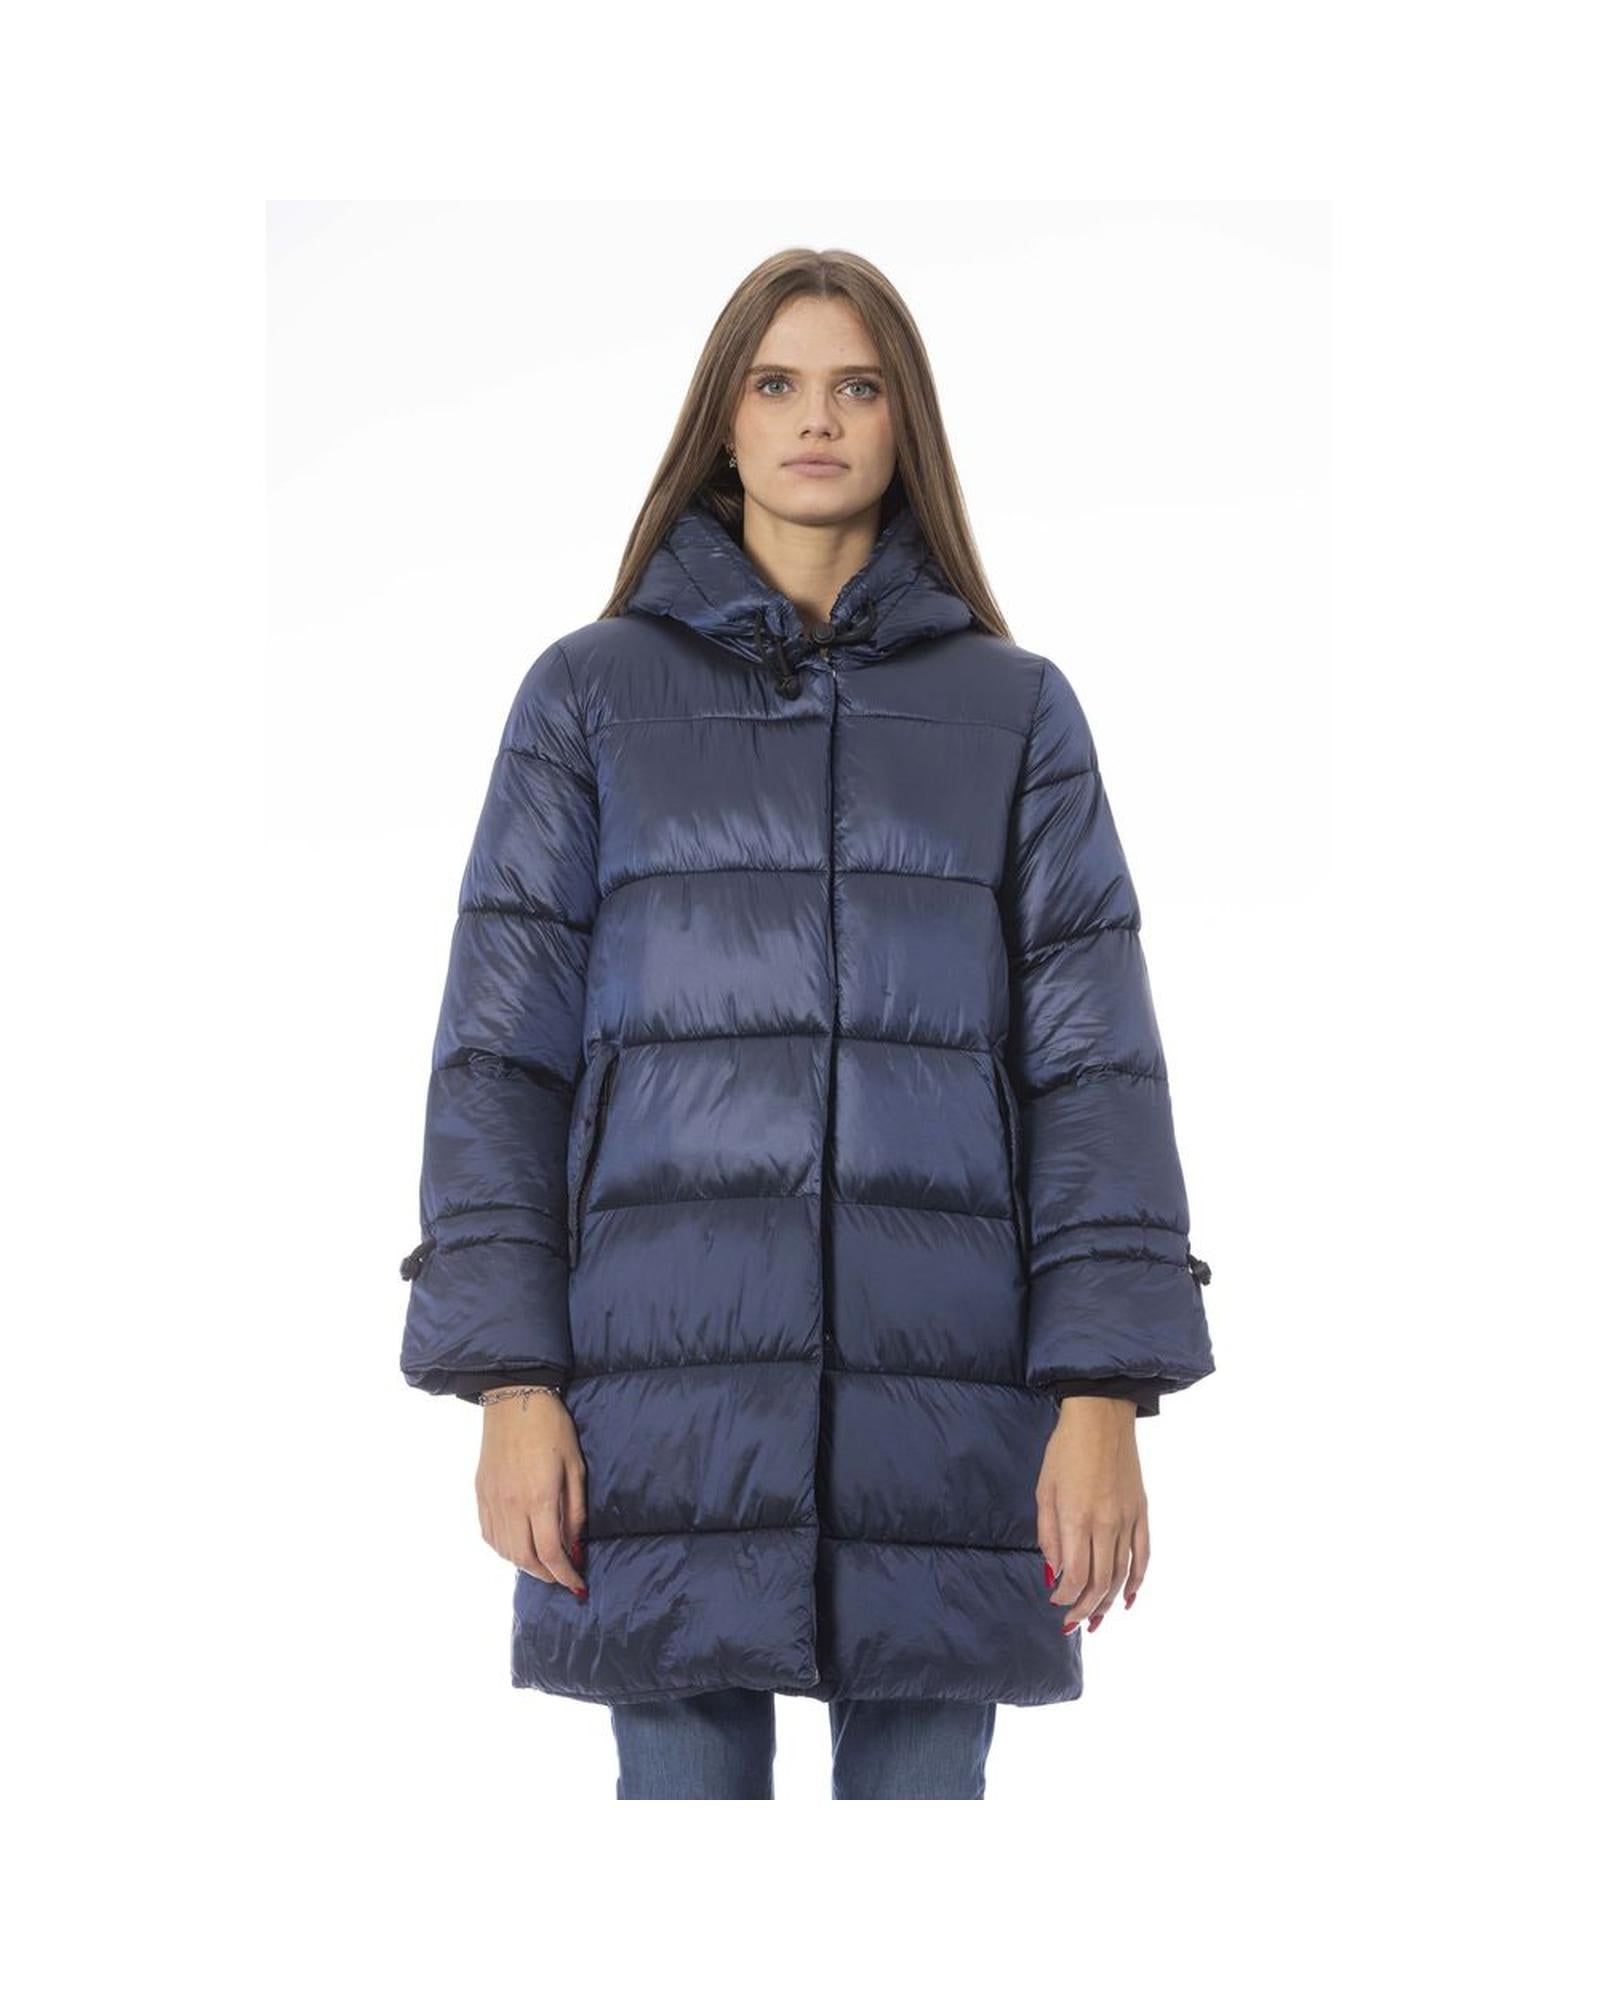 Women's Light Blue Nylon Jackets & Coat - XL